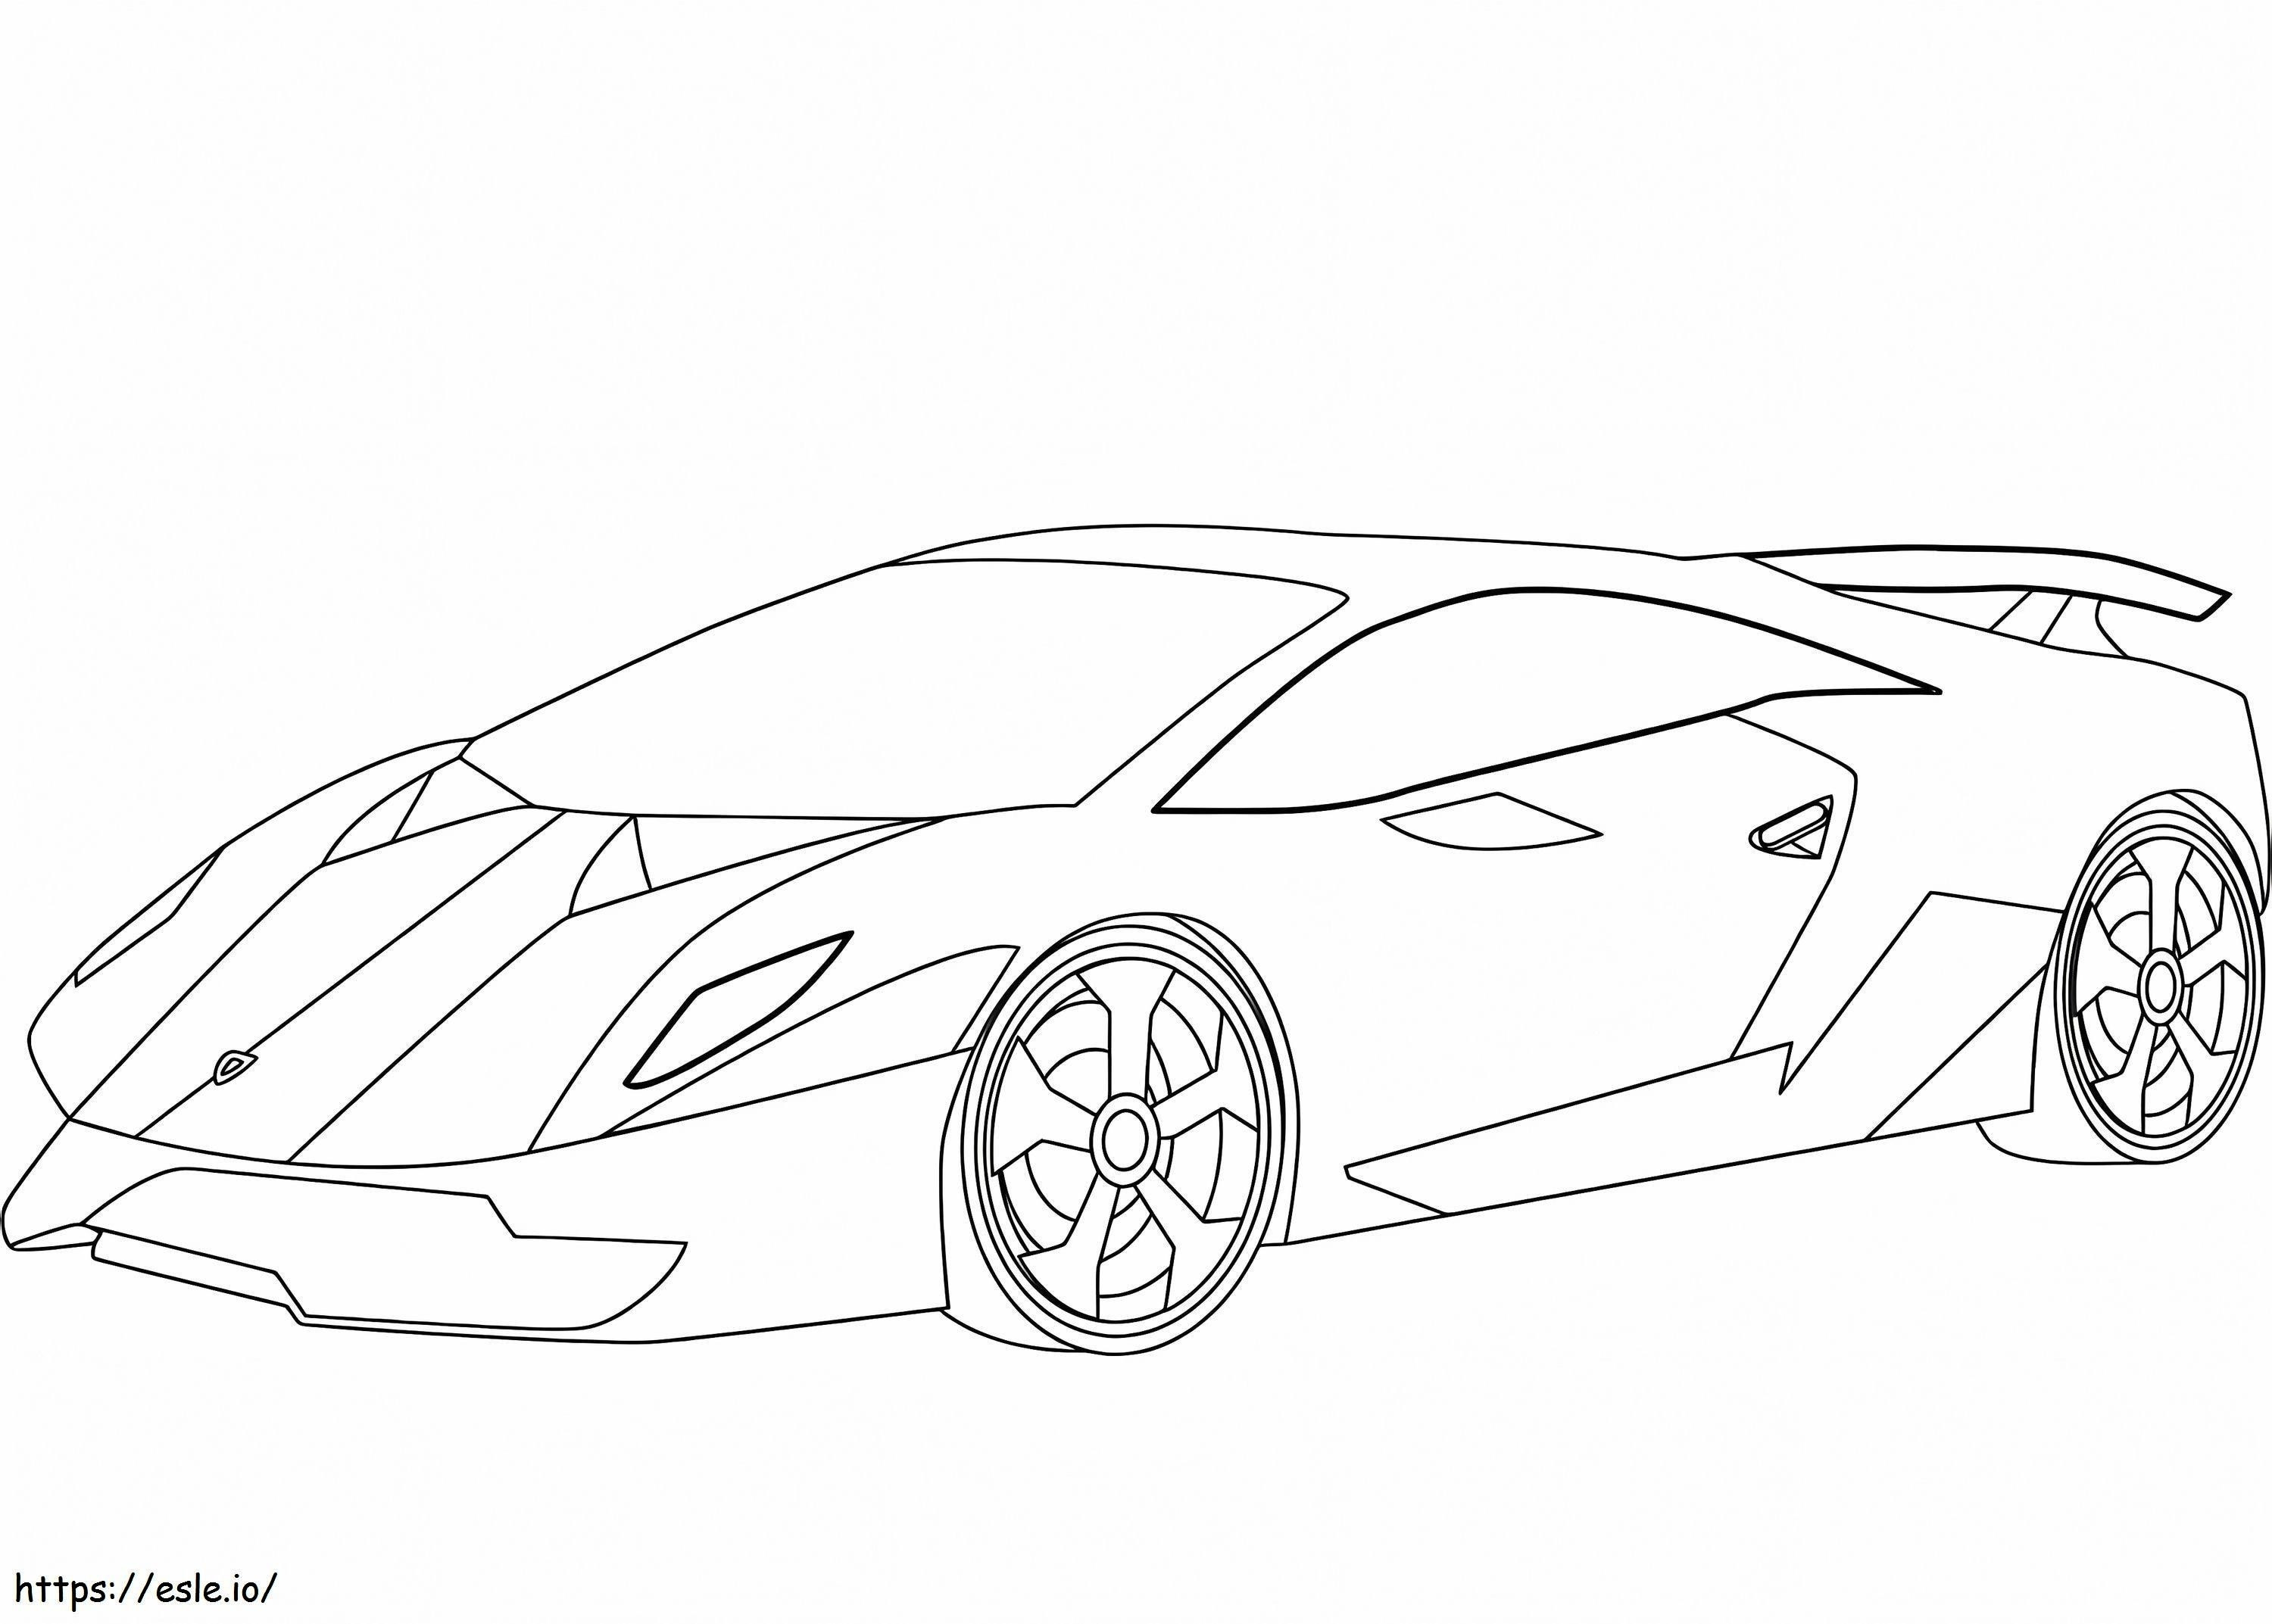 Al șaselea element Lamborghini de colorat